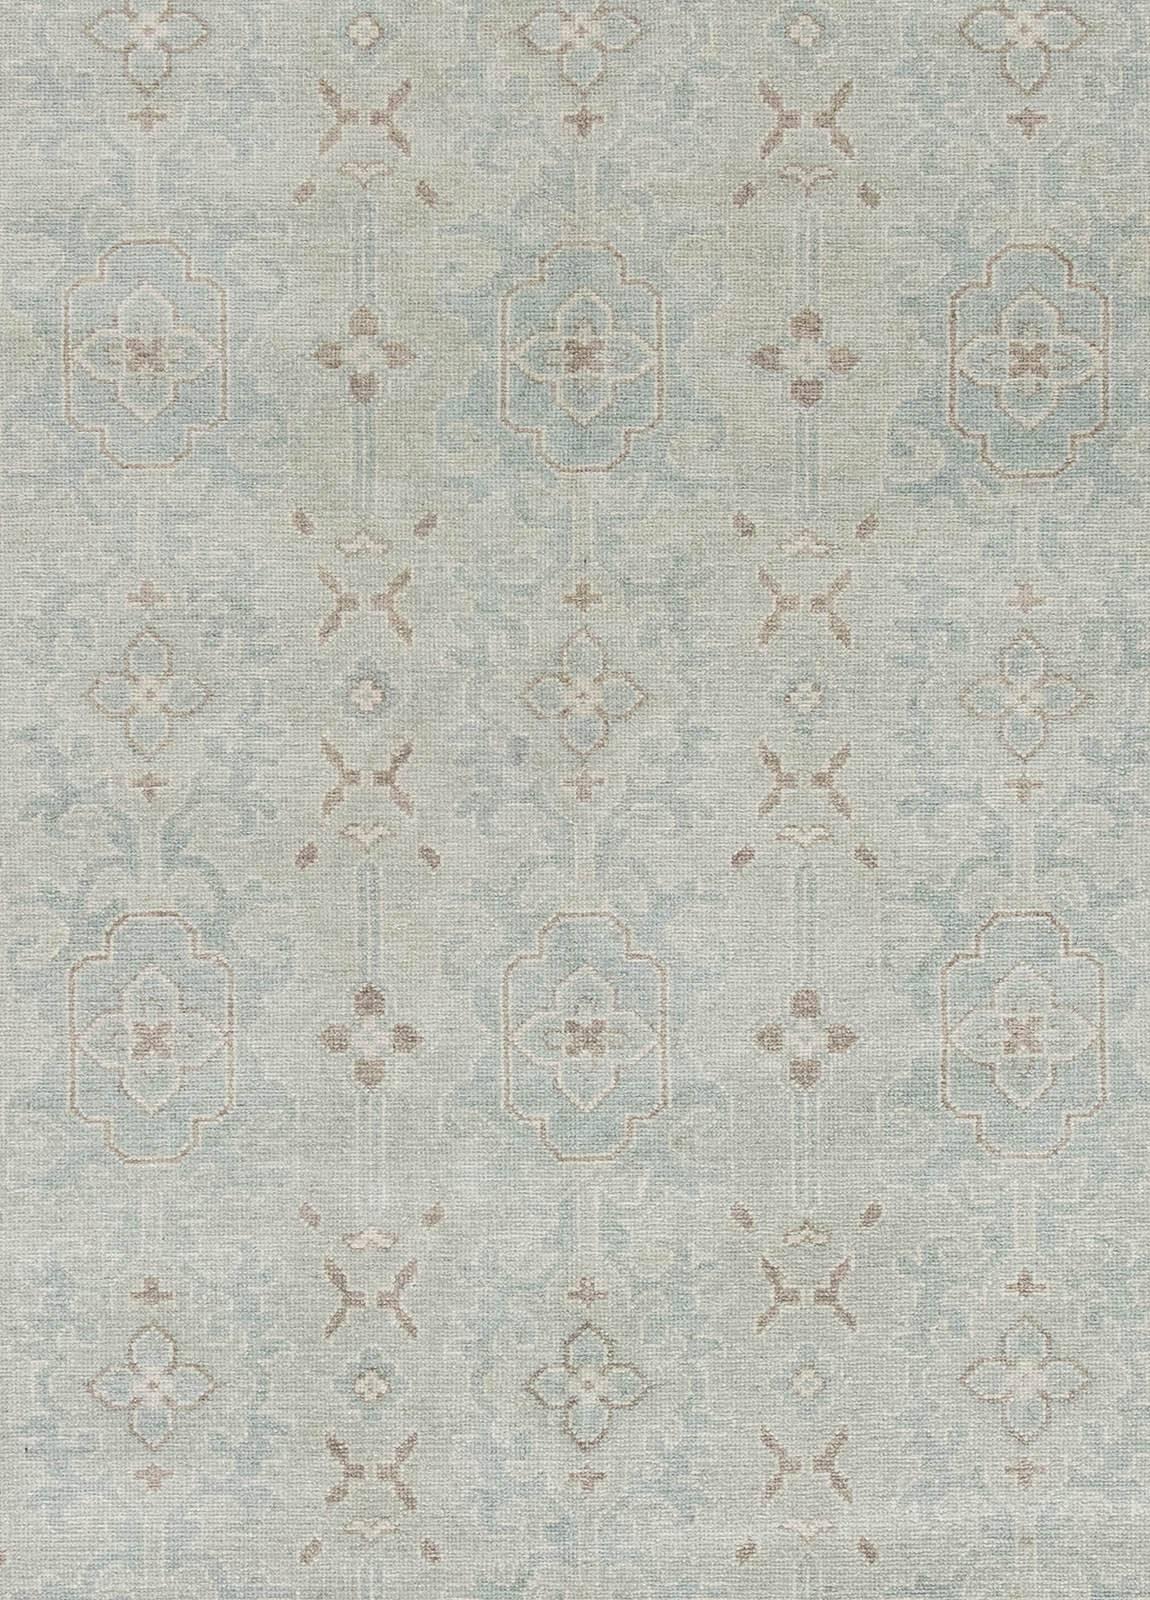 Traditional oriental inspired Samarkand Botanic rug by Doris Leslie Blau
Size: 13'3